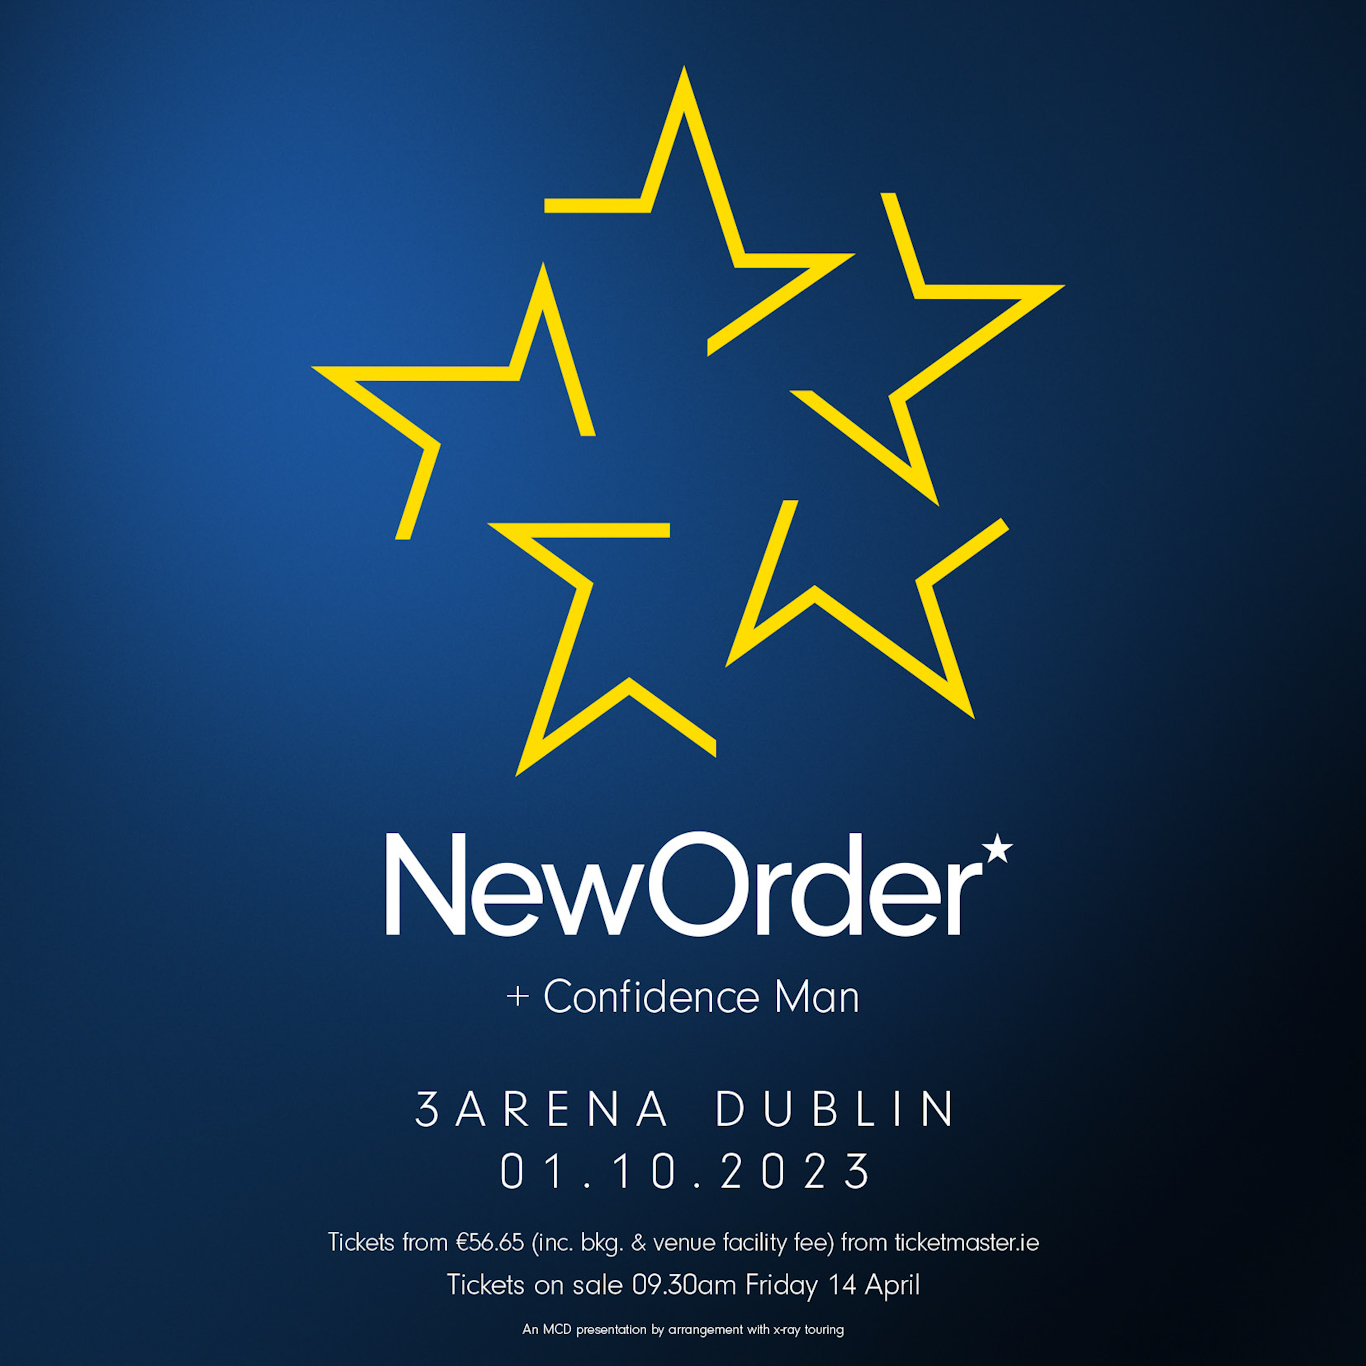 new order